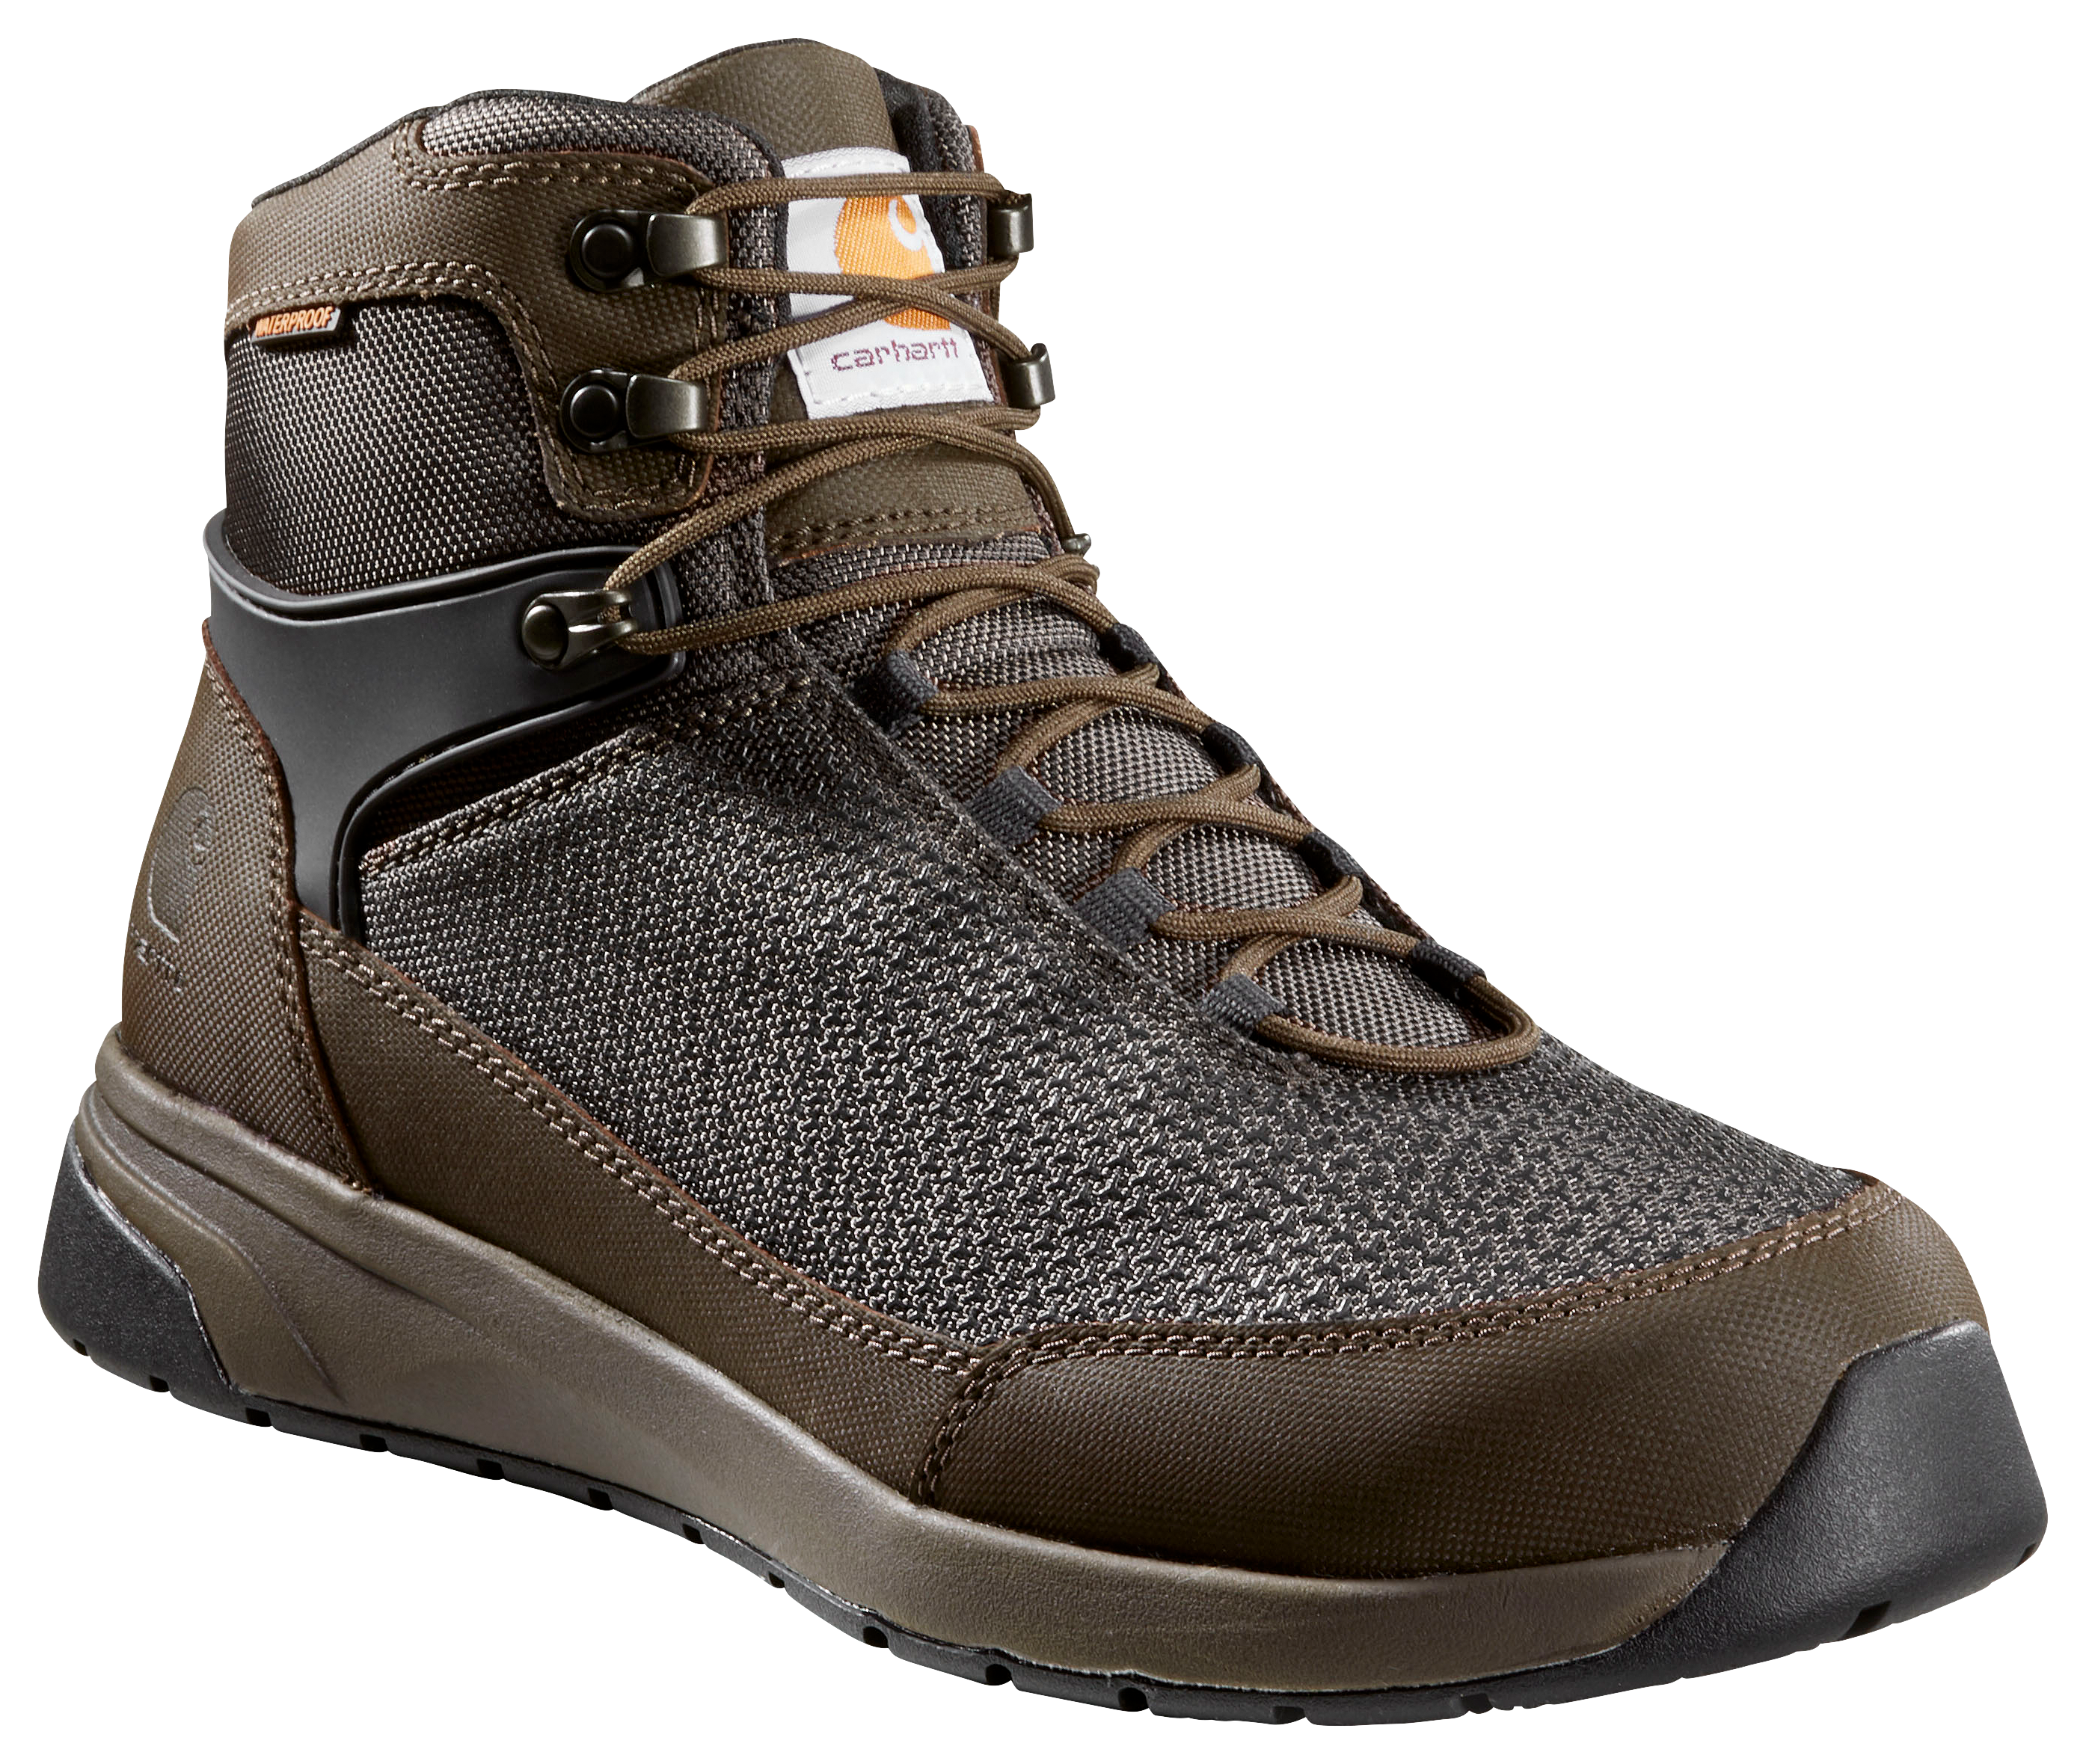 Carhartt Force 6"" Nano Composite-Toe Work Boots for Men - Espresso - 13M